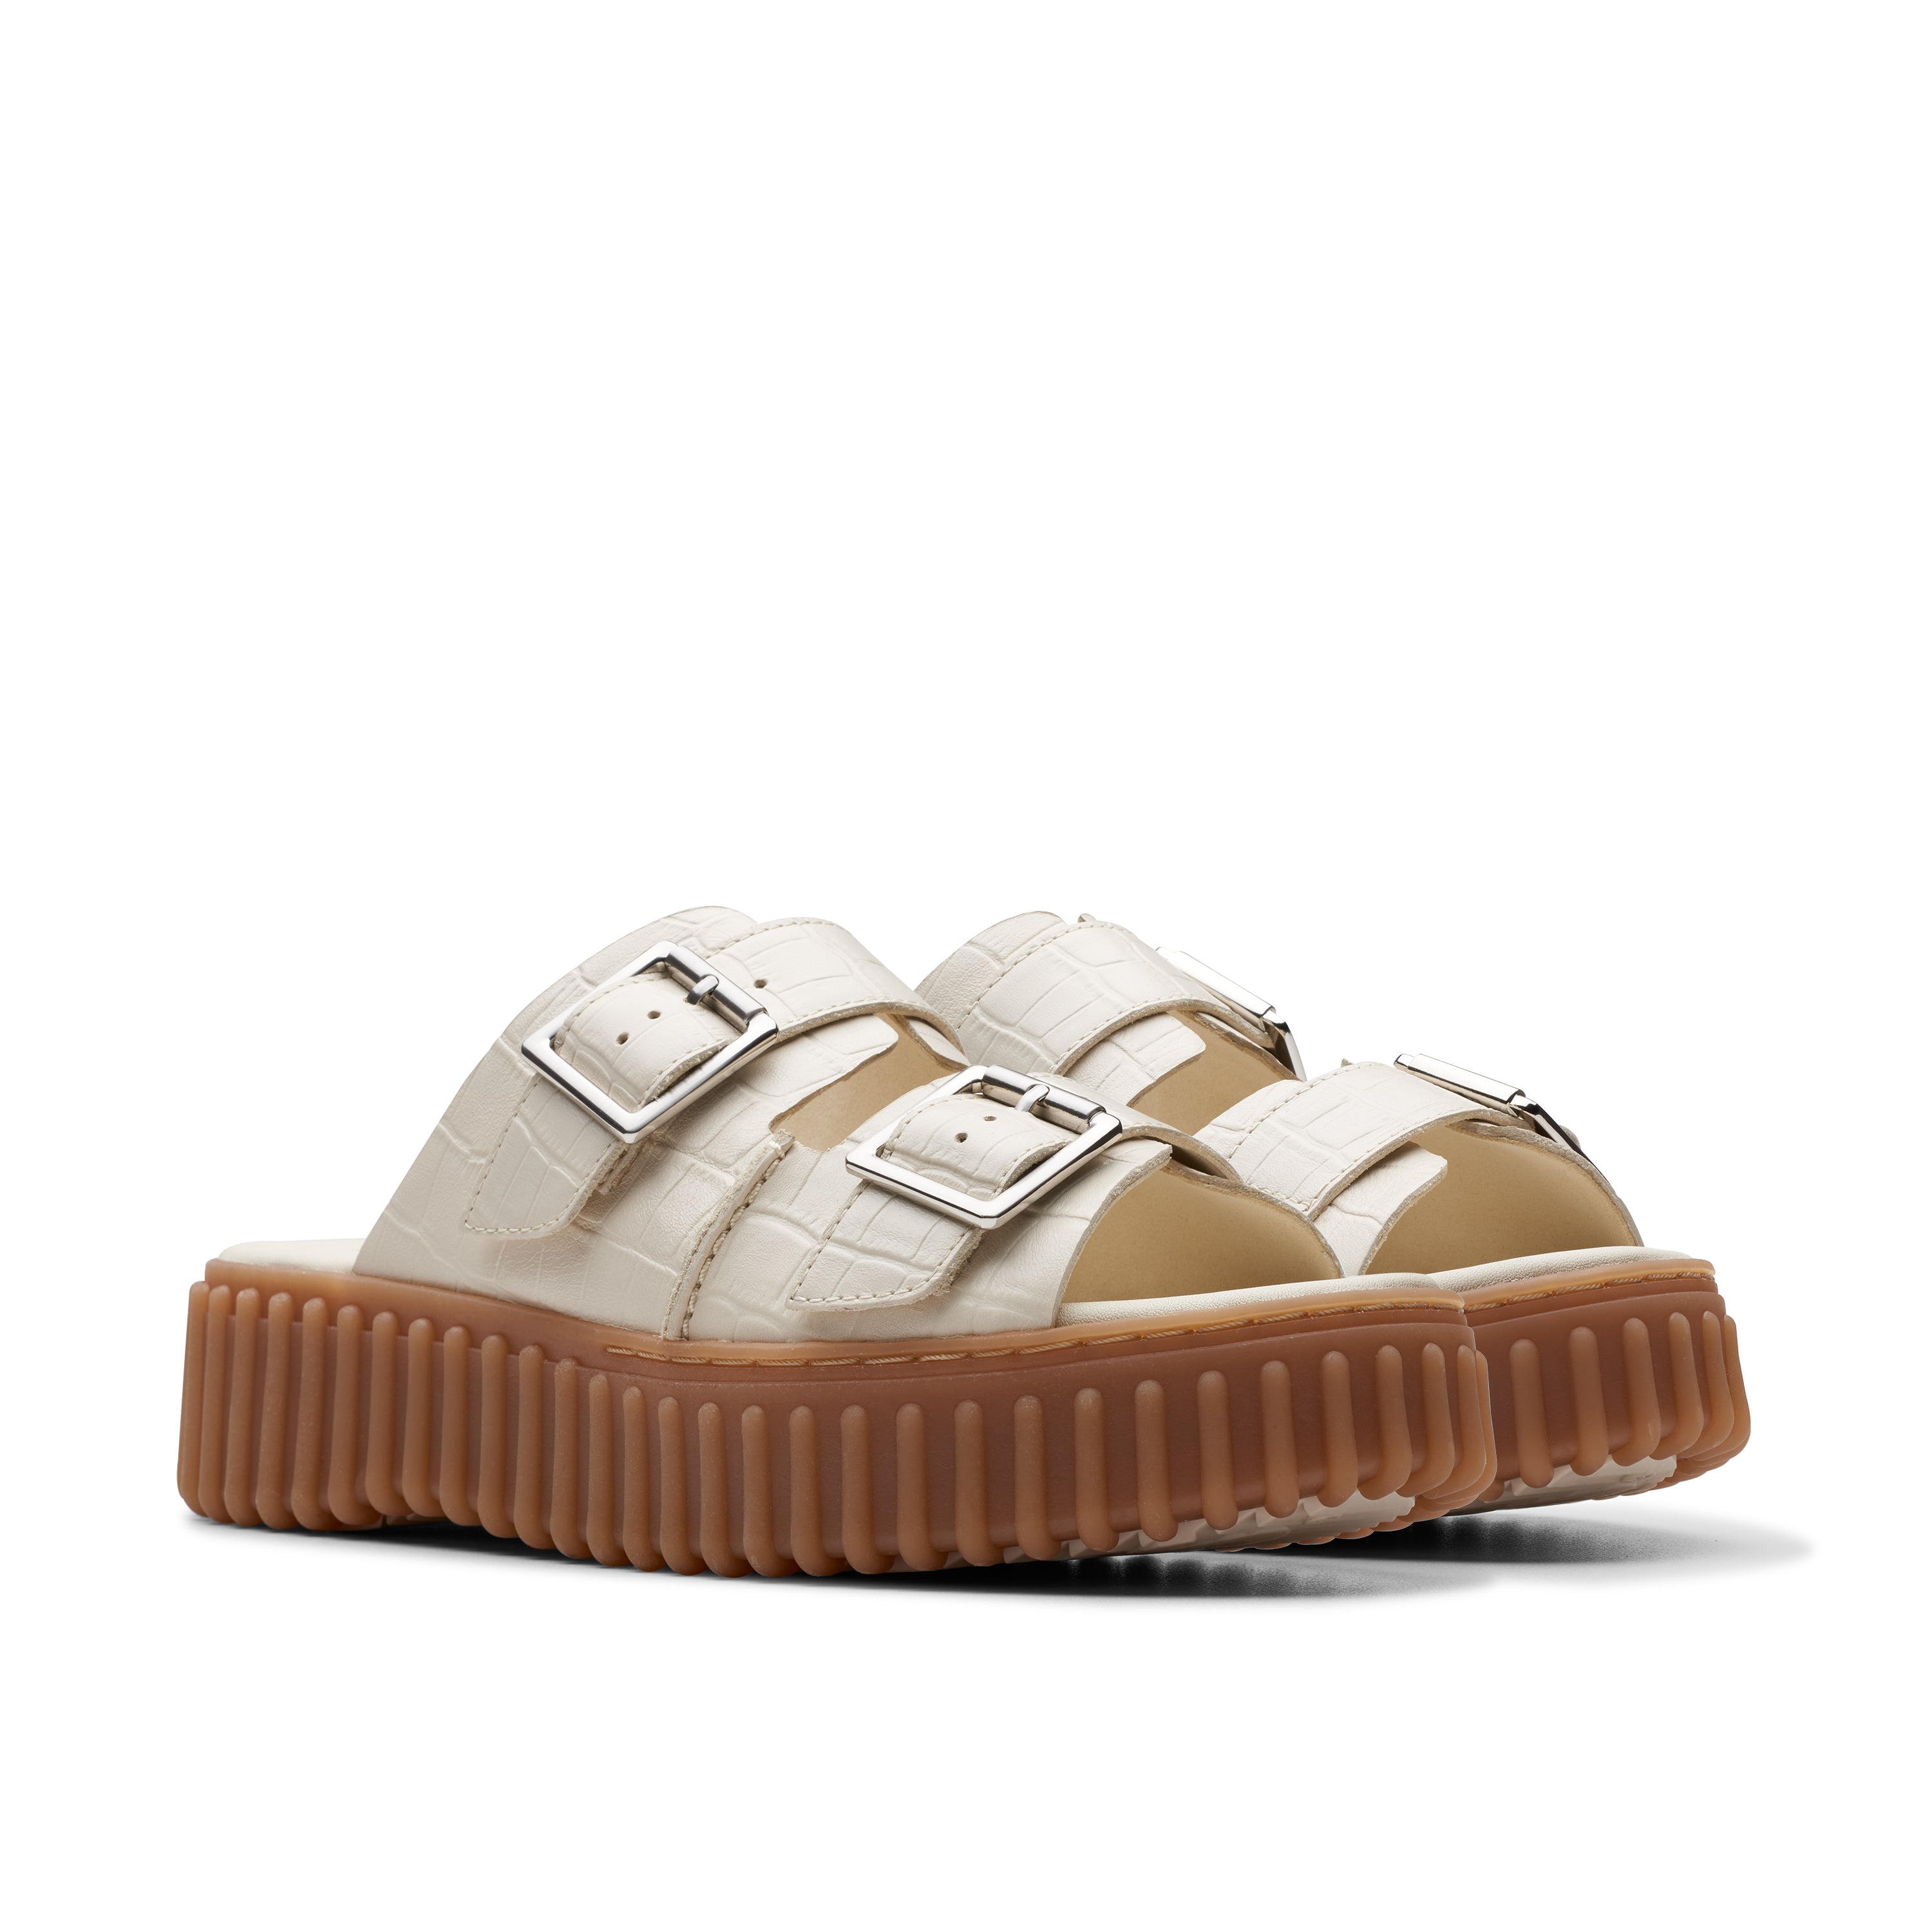 Buy Sandals For Kids: Drs-208-Azalea-Pink | Campus Shoes